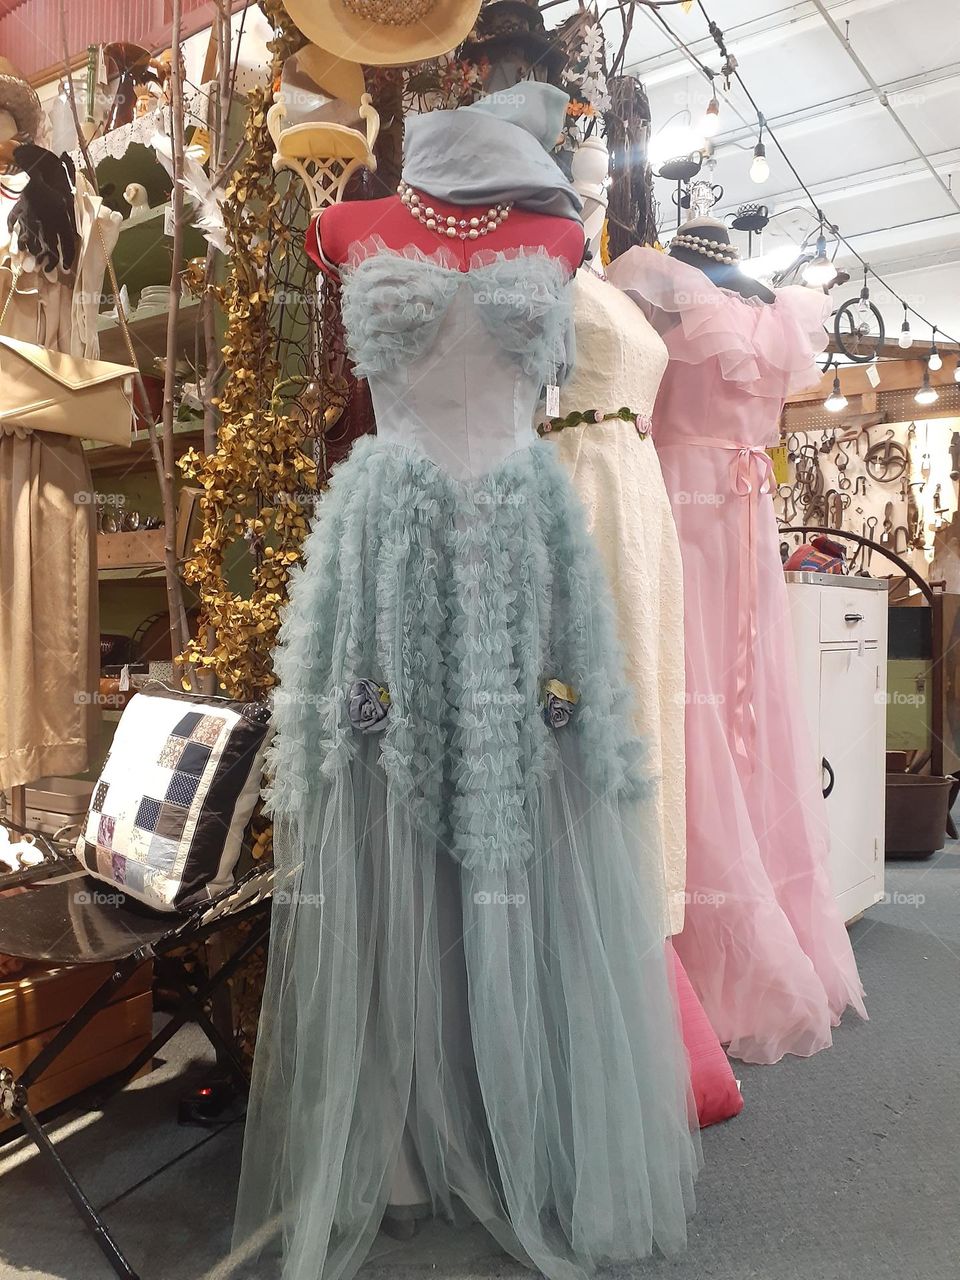 Antique Dresses